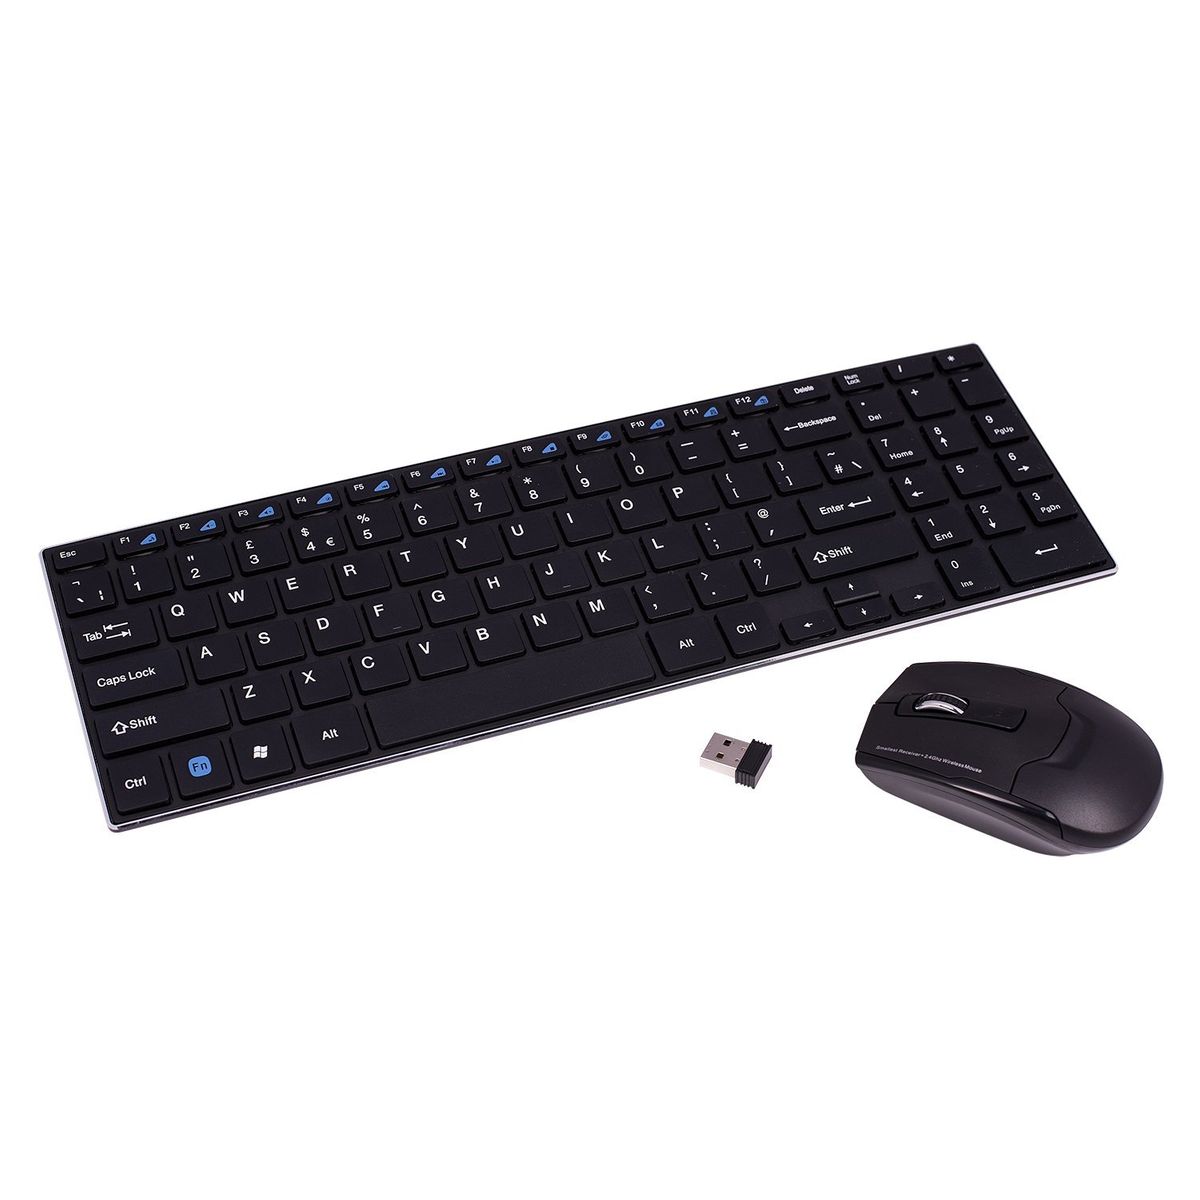 2.4GHz Ultra Slim Full Size Metal Wireless Keyboard & Mouse Combo